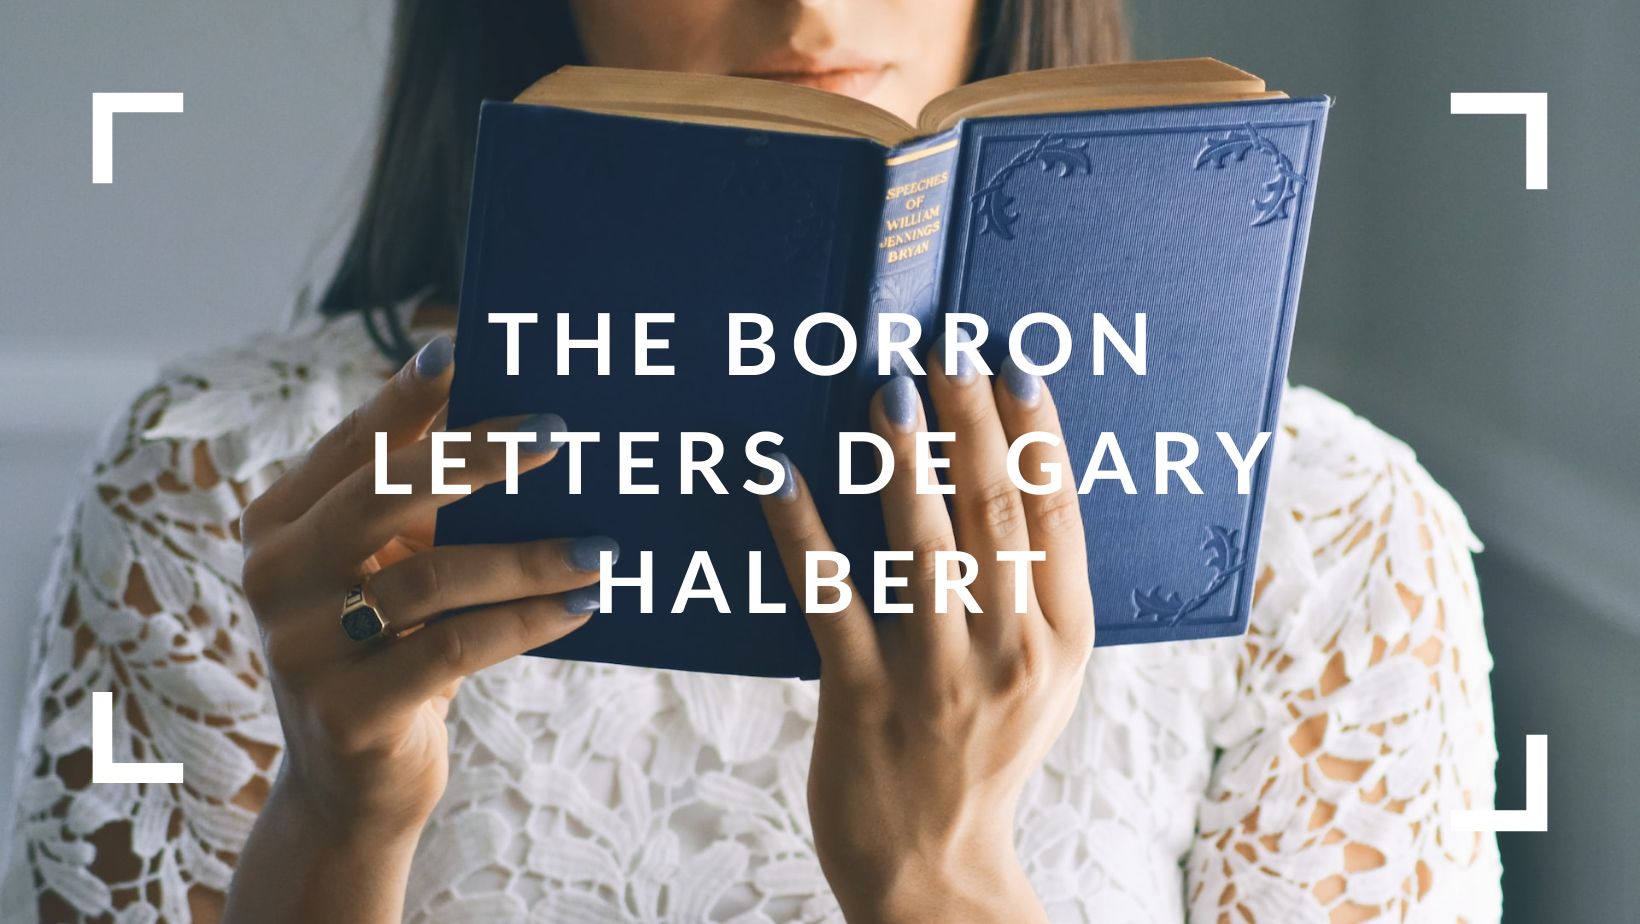 The Borron Letters de Gary Halbert